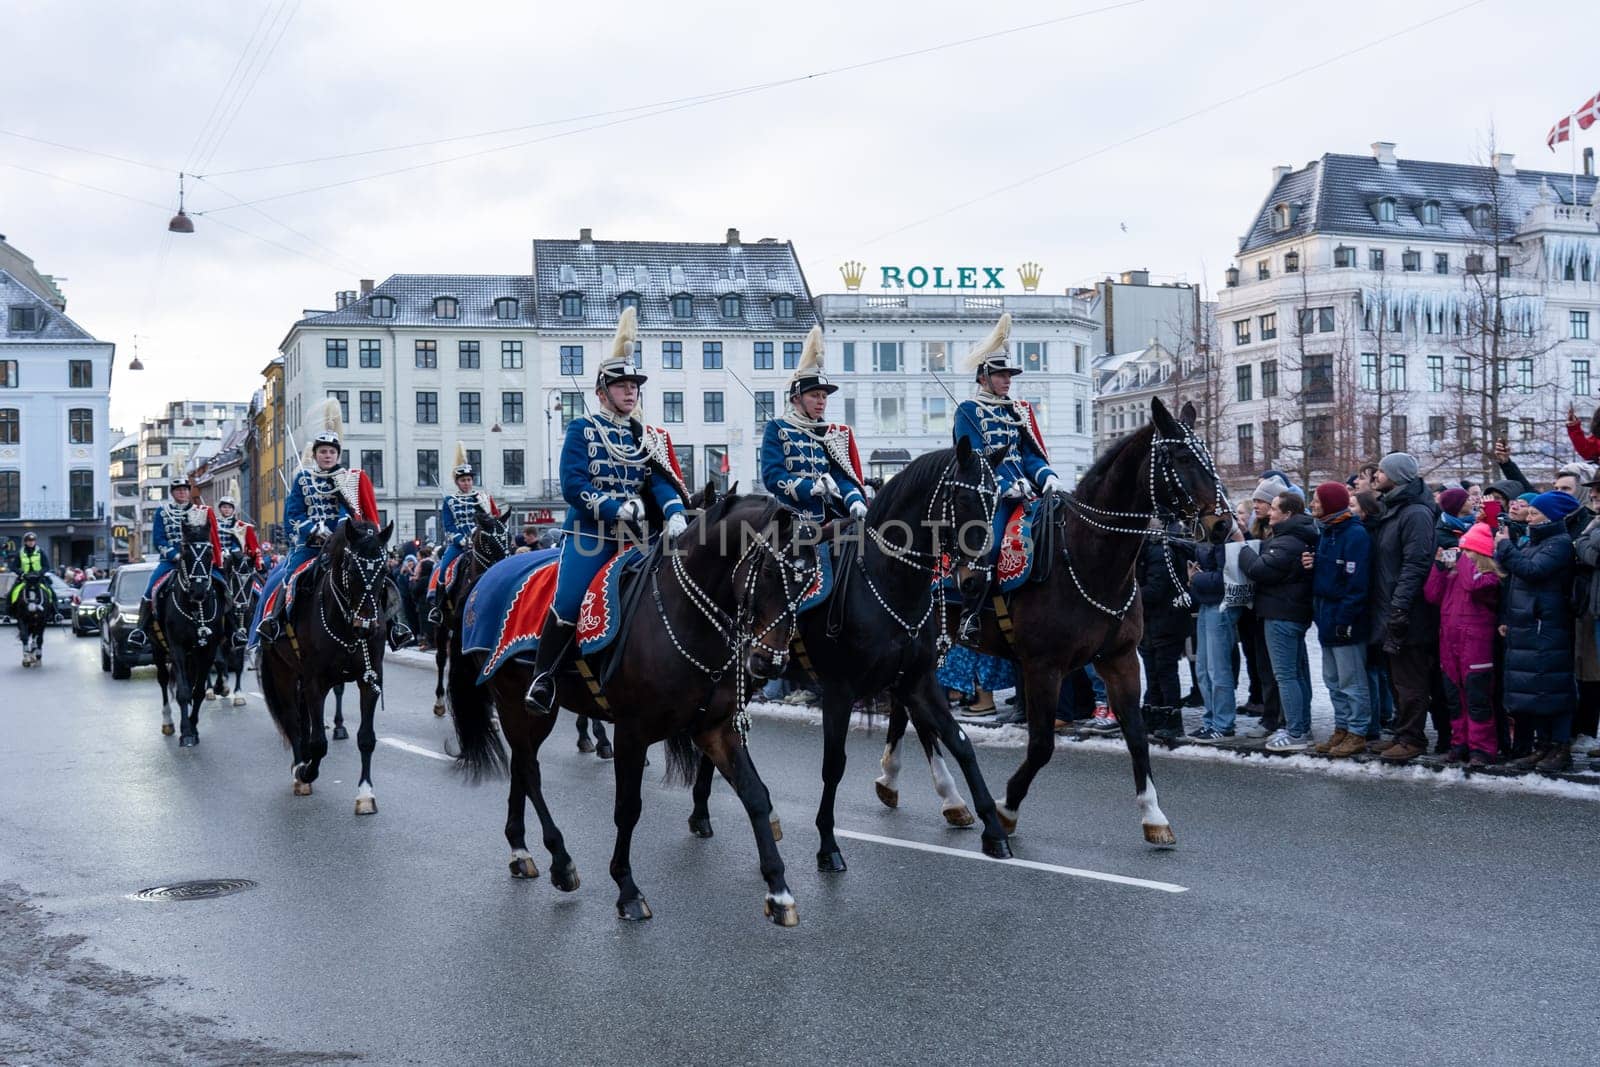 Queen Margrethe II Ride in Golden Carriage by oliverfoerstner